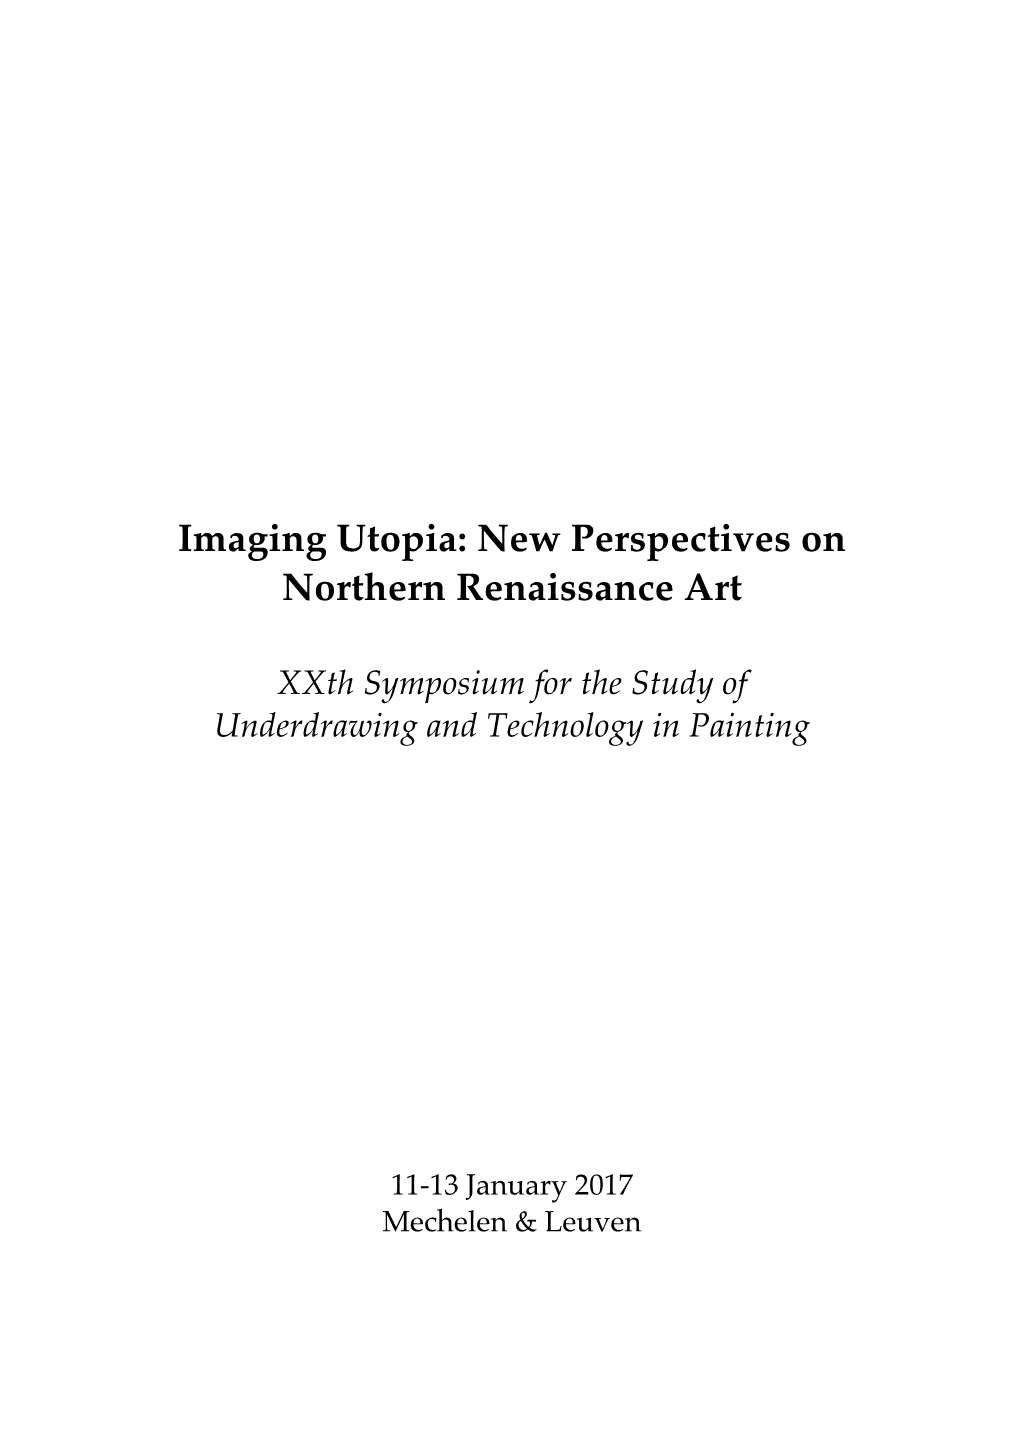 Imaging Utopia: New Perspectives on Northern Renaissance Art